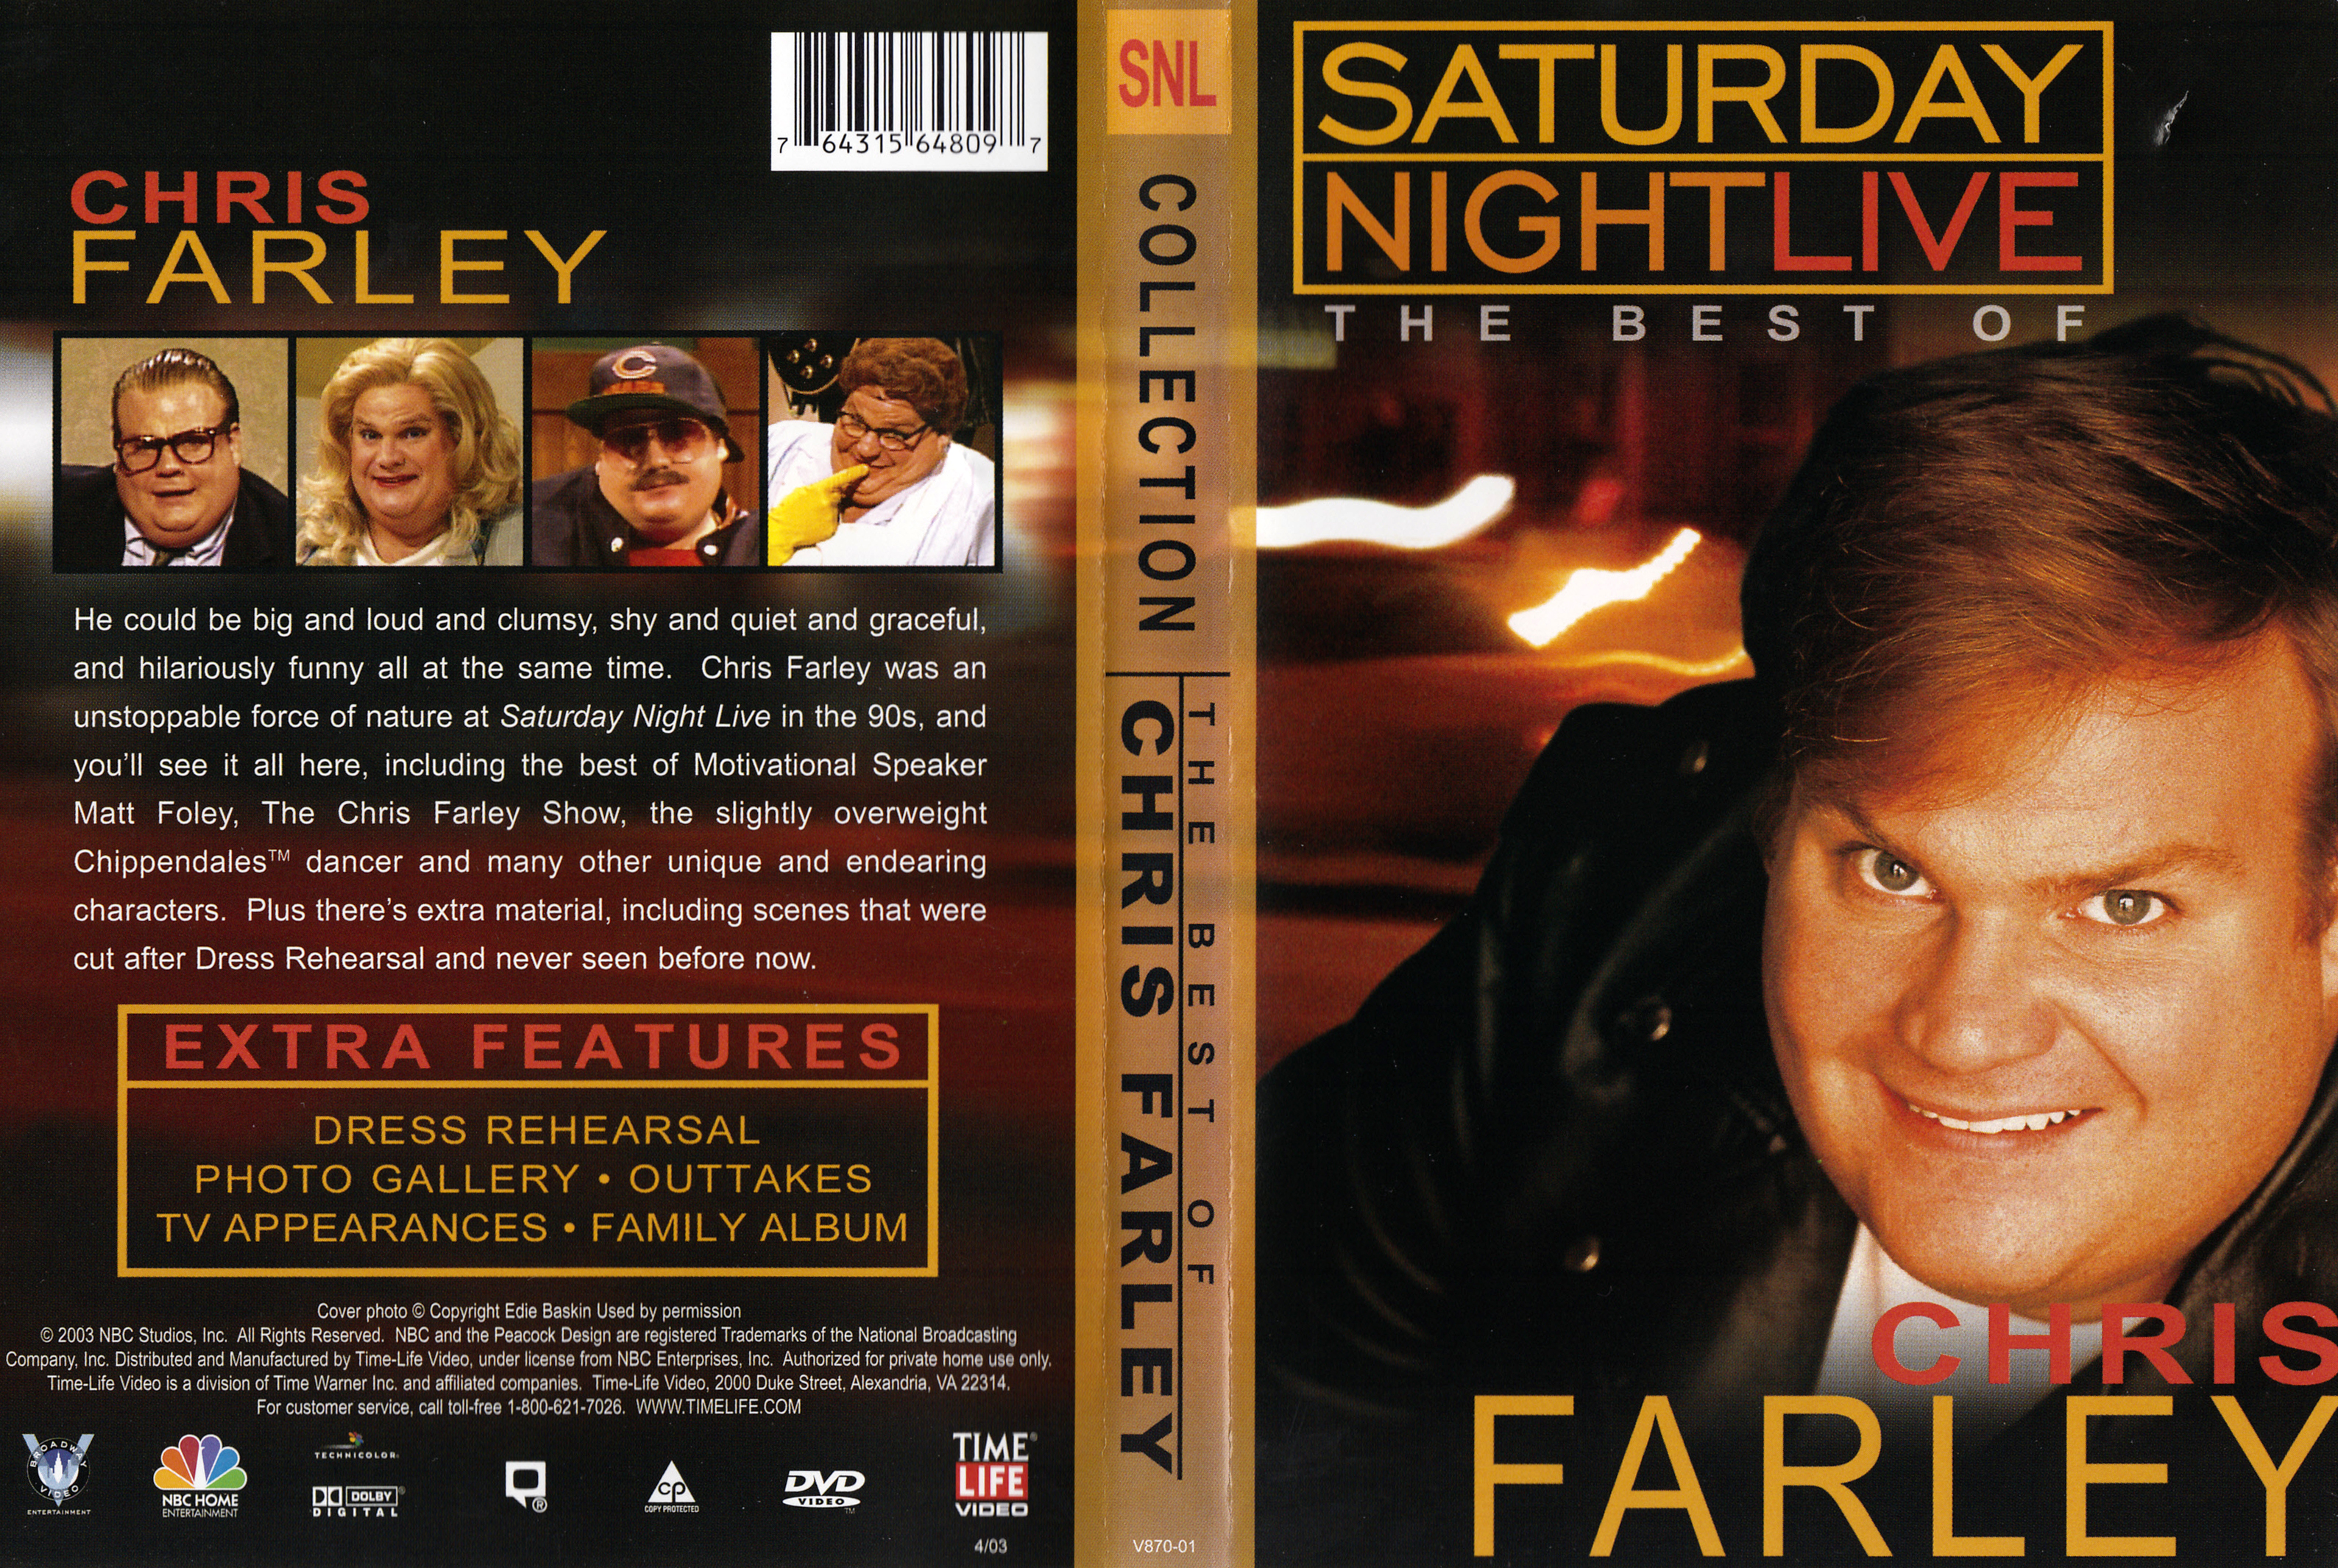 Jaquette DVD Saturday night live - Chris Farley